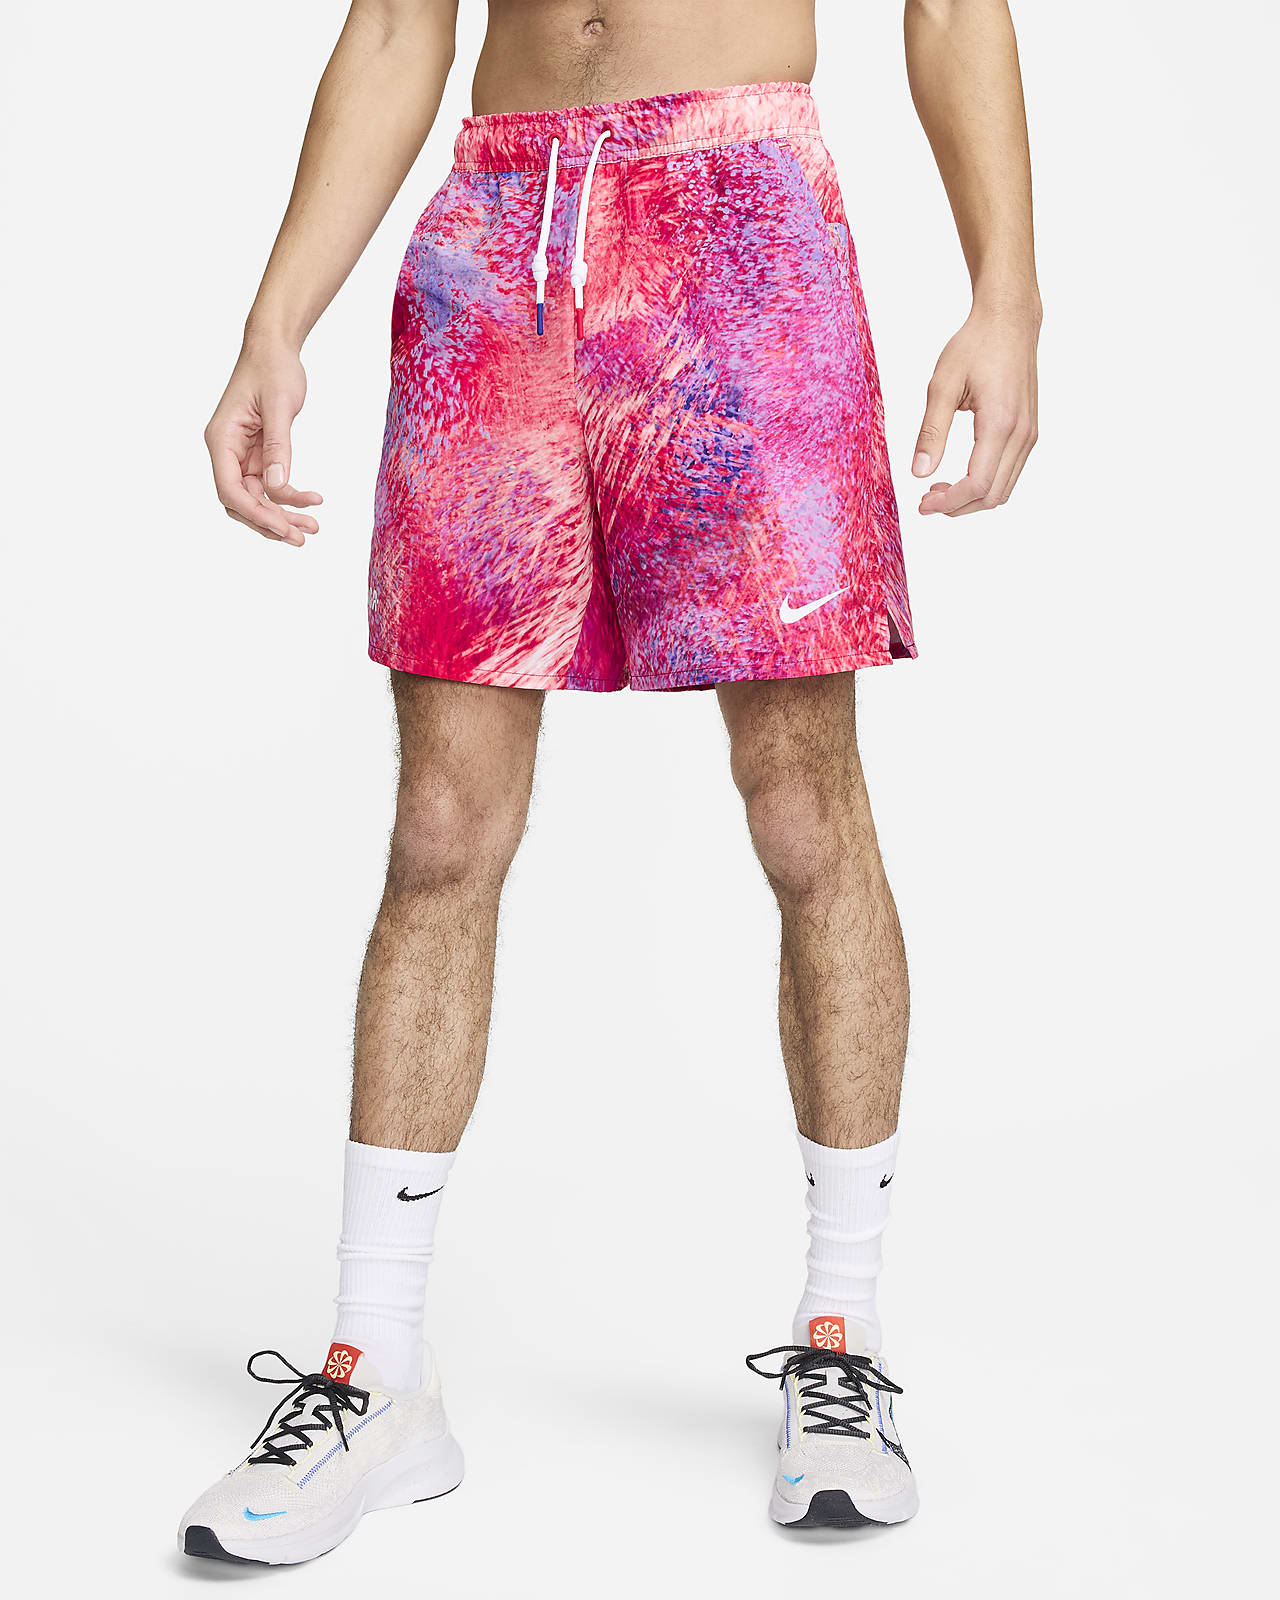 USA Unlimited Men's Nike Dri-FIT Versatile 7" Unlined Shorts